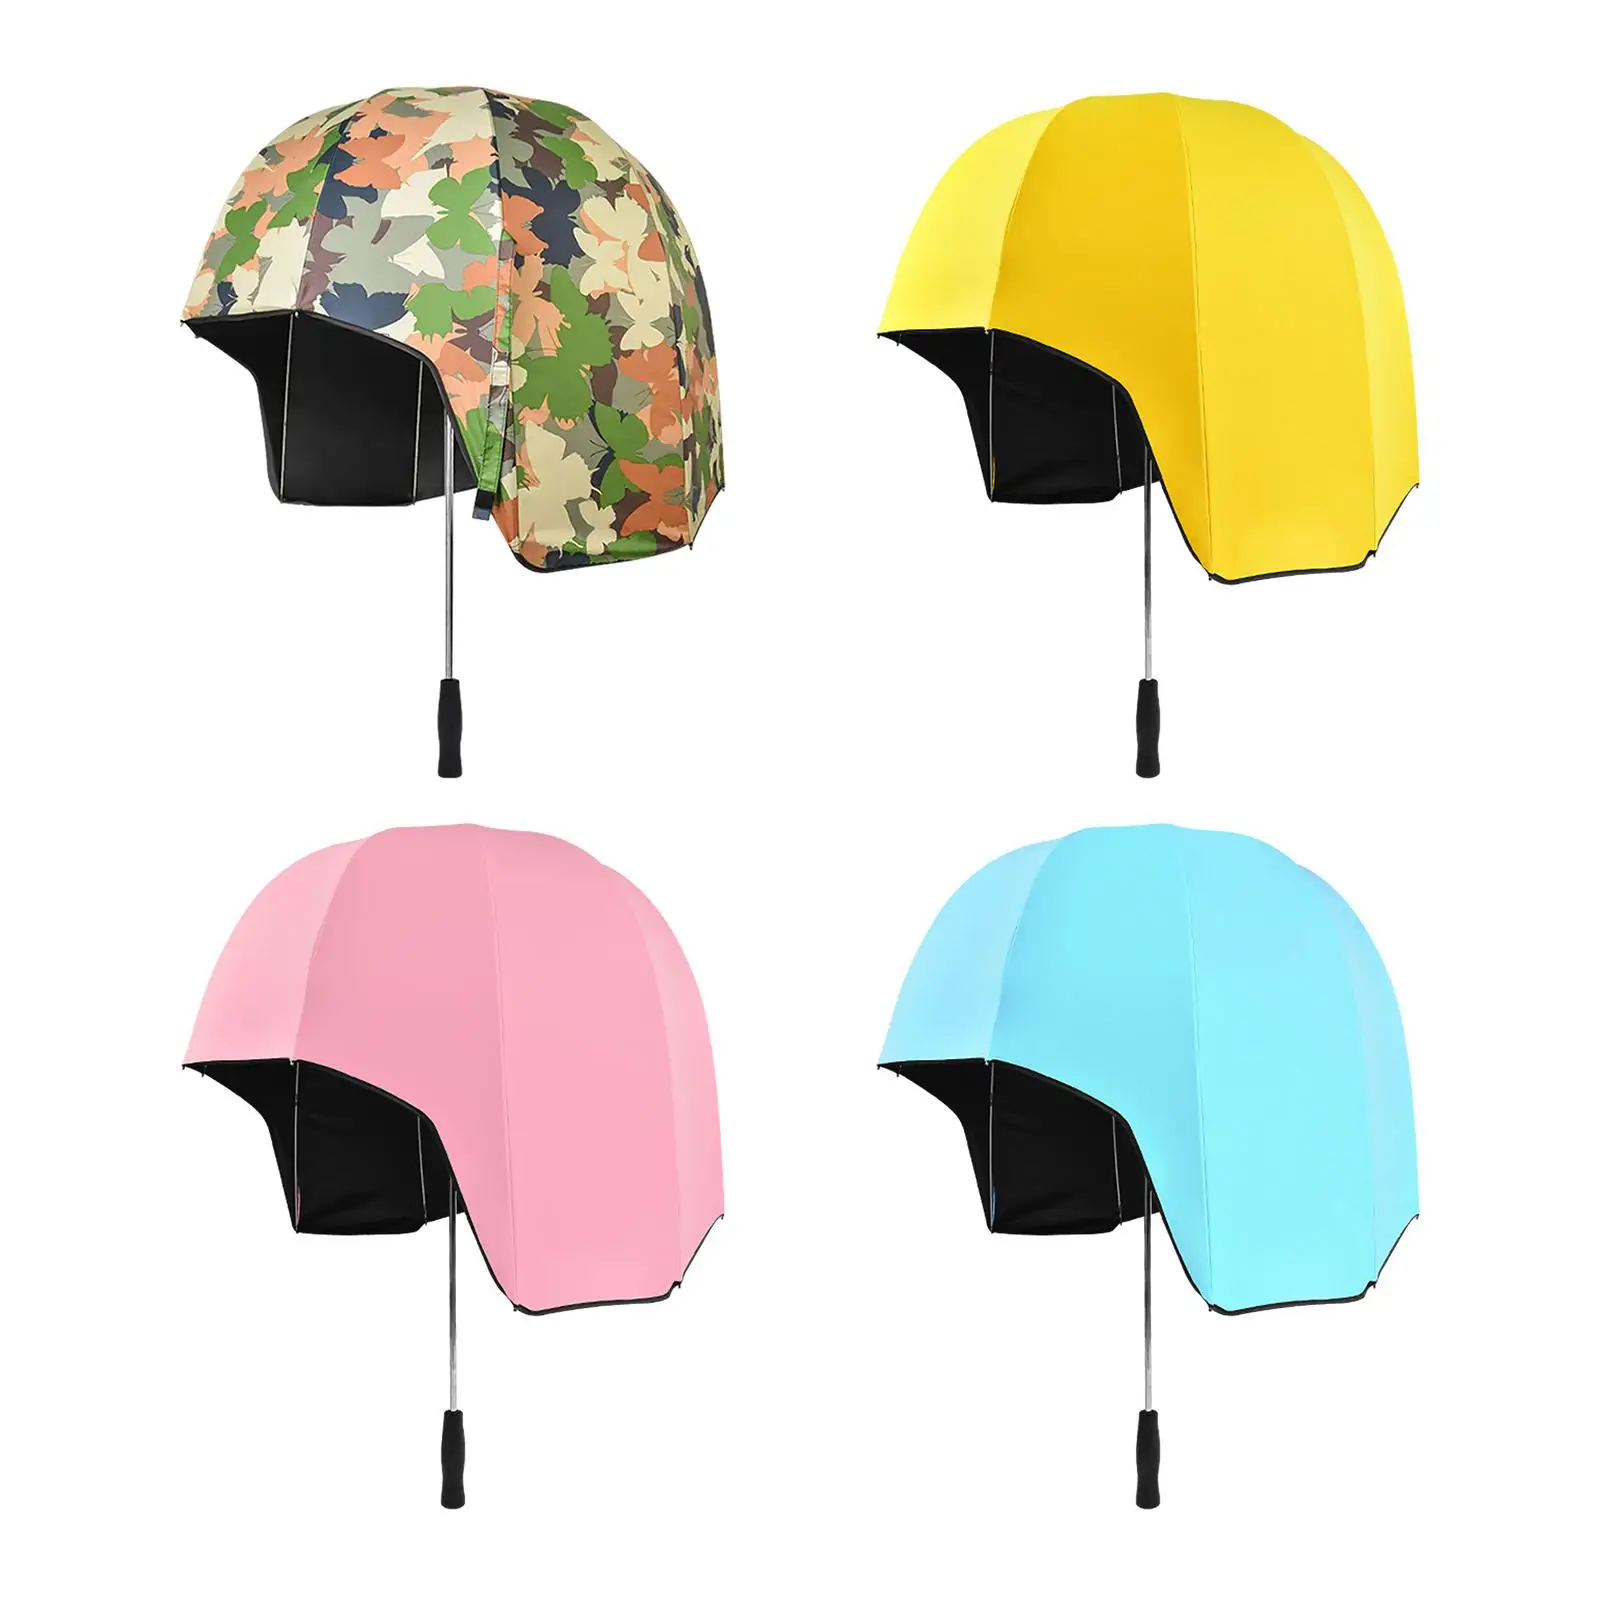 Dual Use Umbrella Waterproof PU Handle for Women Sun Umbrella Rain Umbrellas for Beach Travel Outdoor Activities Trips Hiking